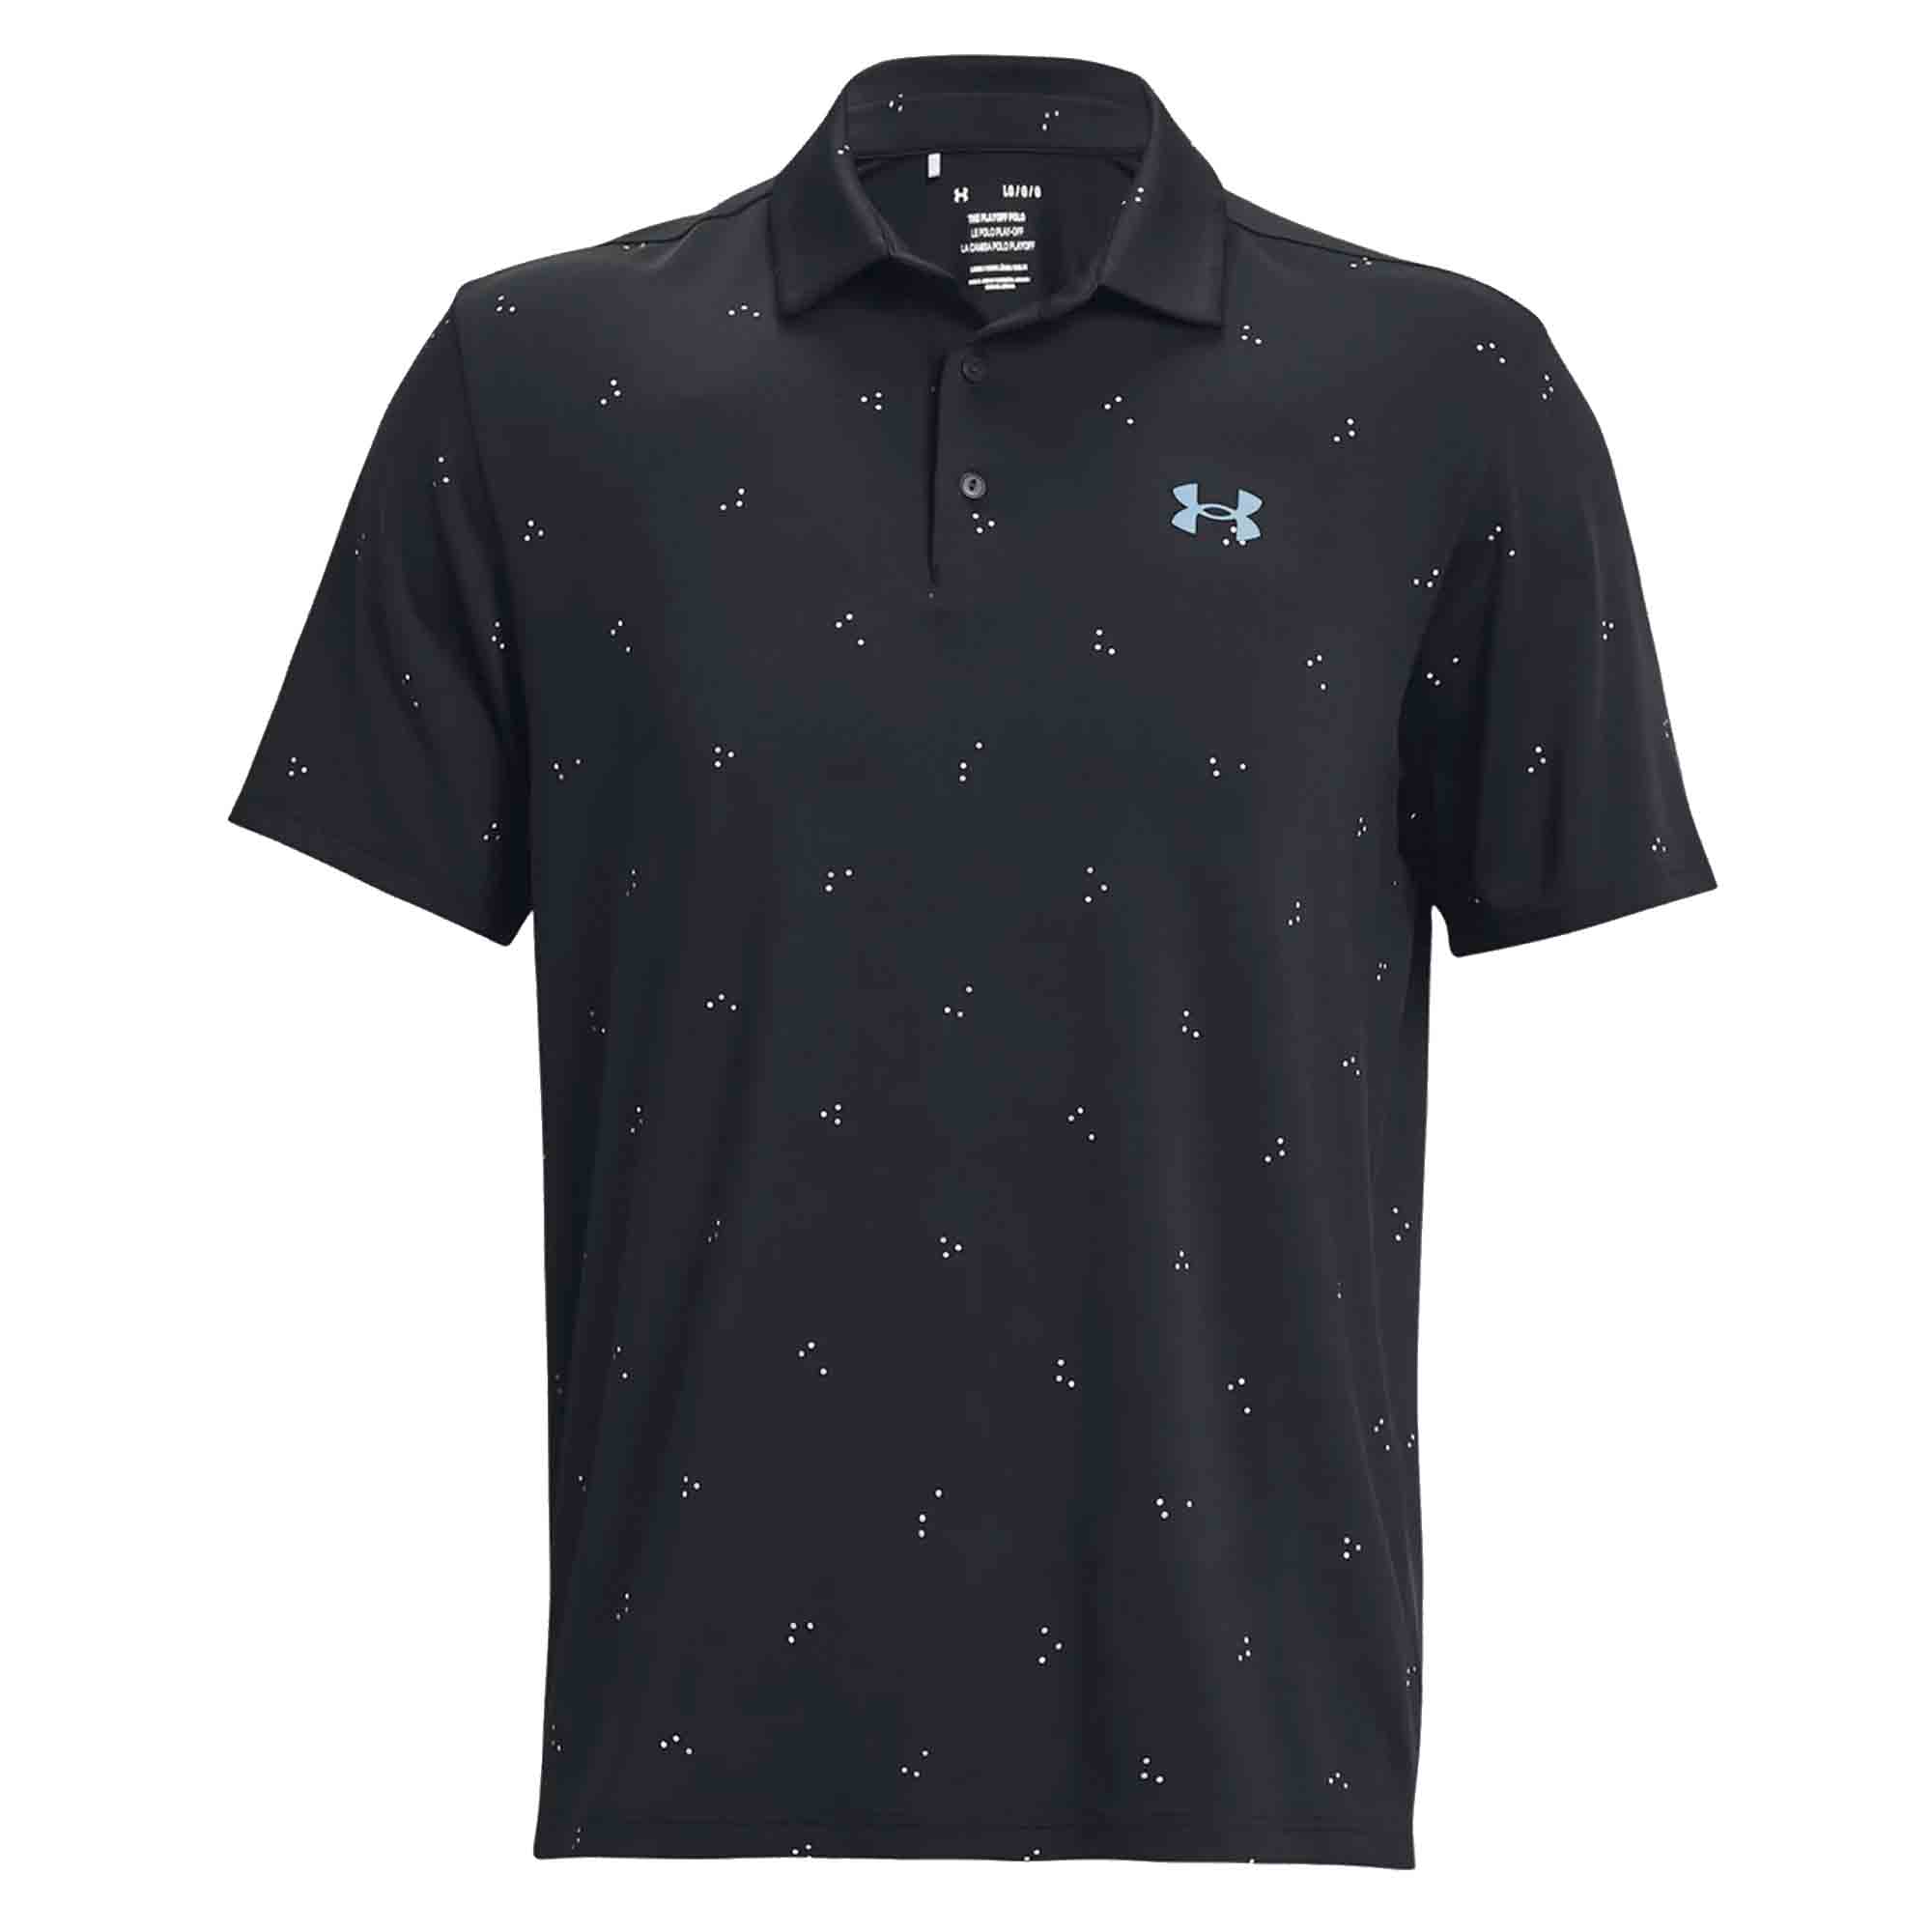 Under Armour Mens Playoff 3.0 Printed Golf Polo Shirt  - Black/Lime Surge